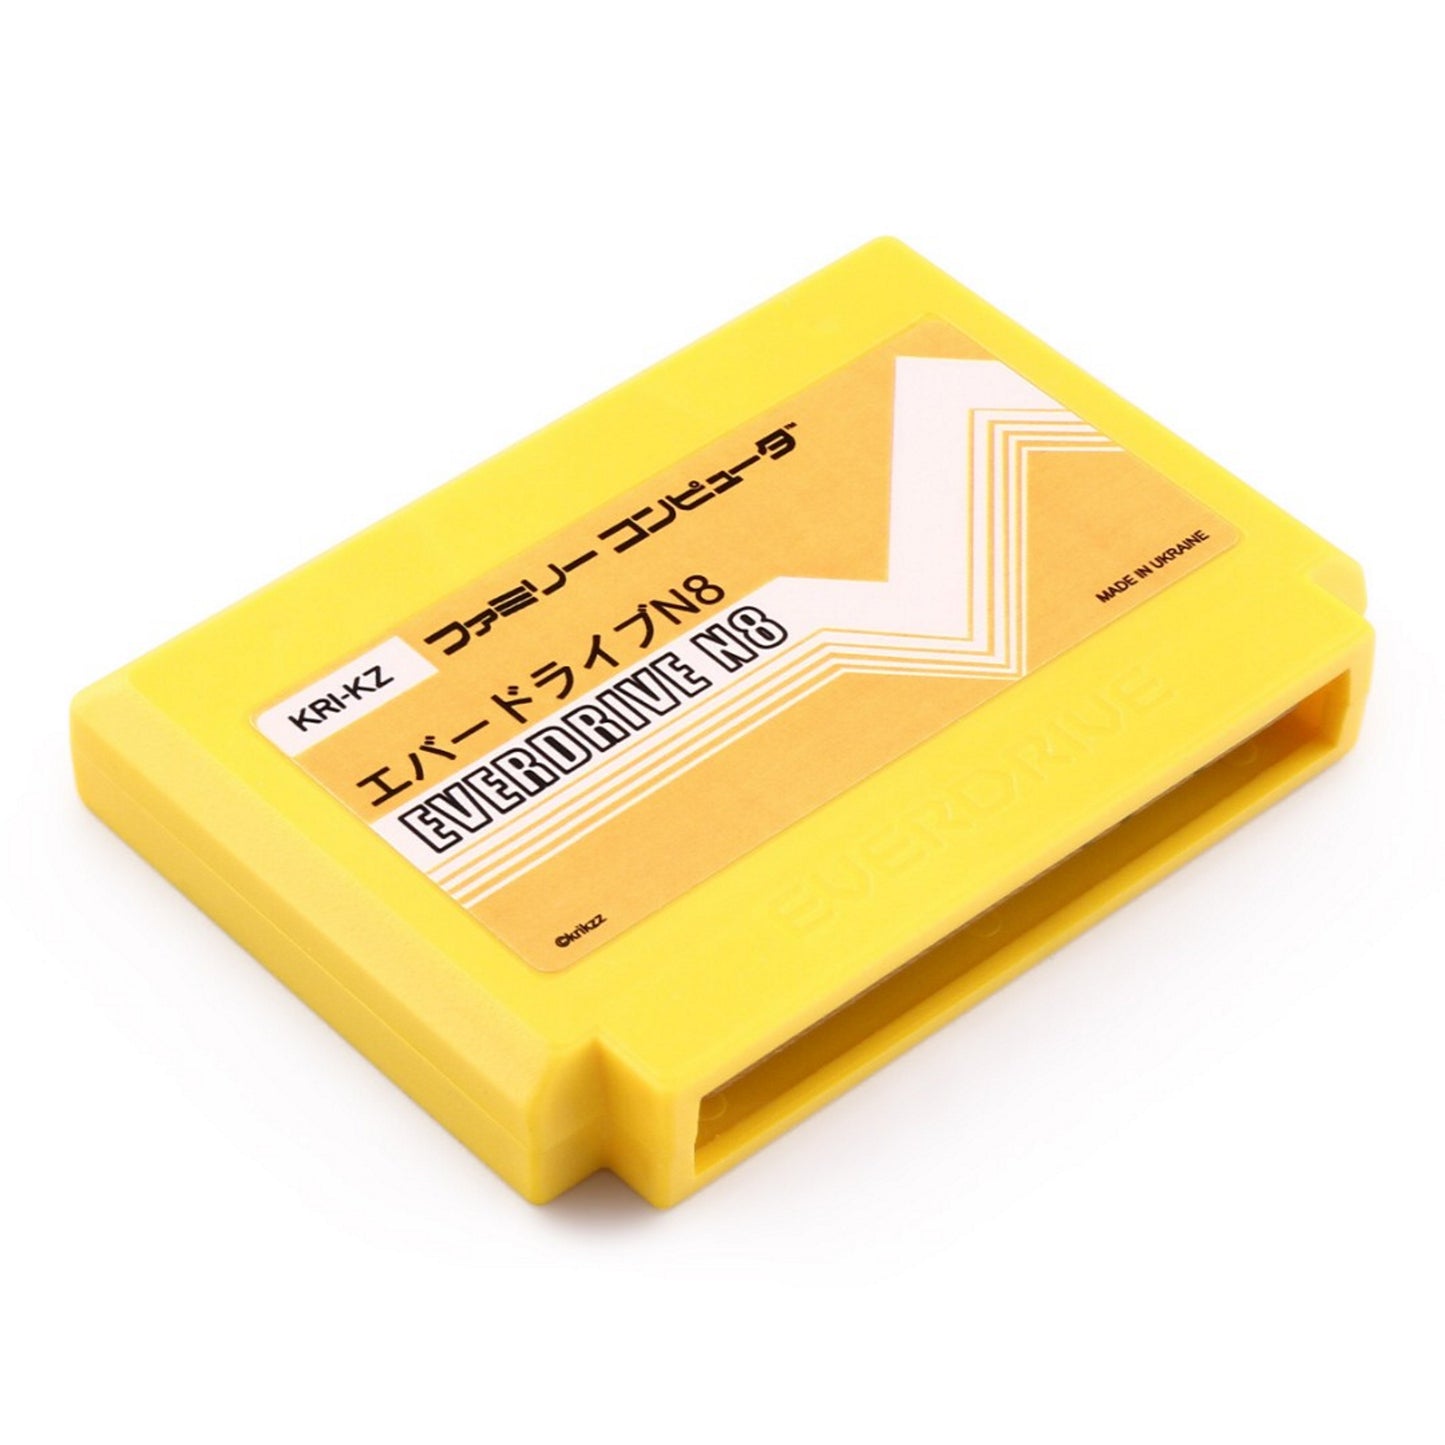 Everdrive N8 Famicom - Yellow